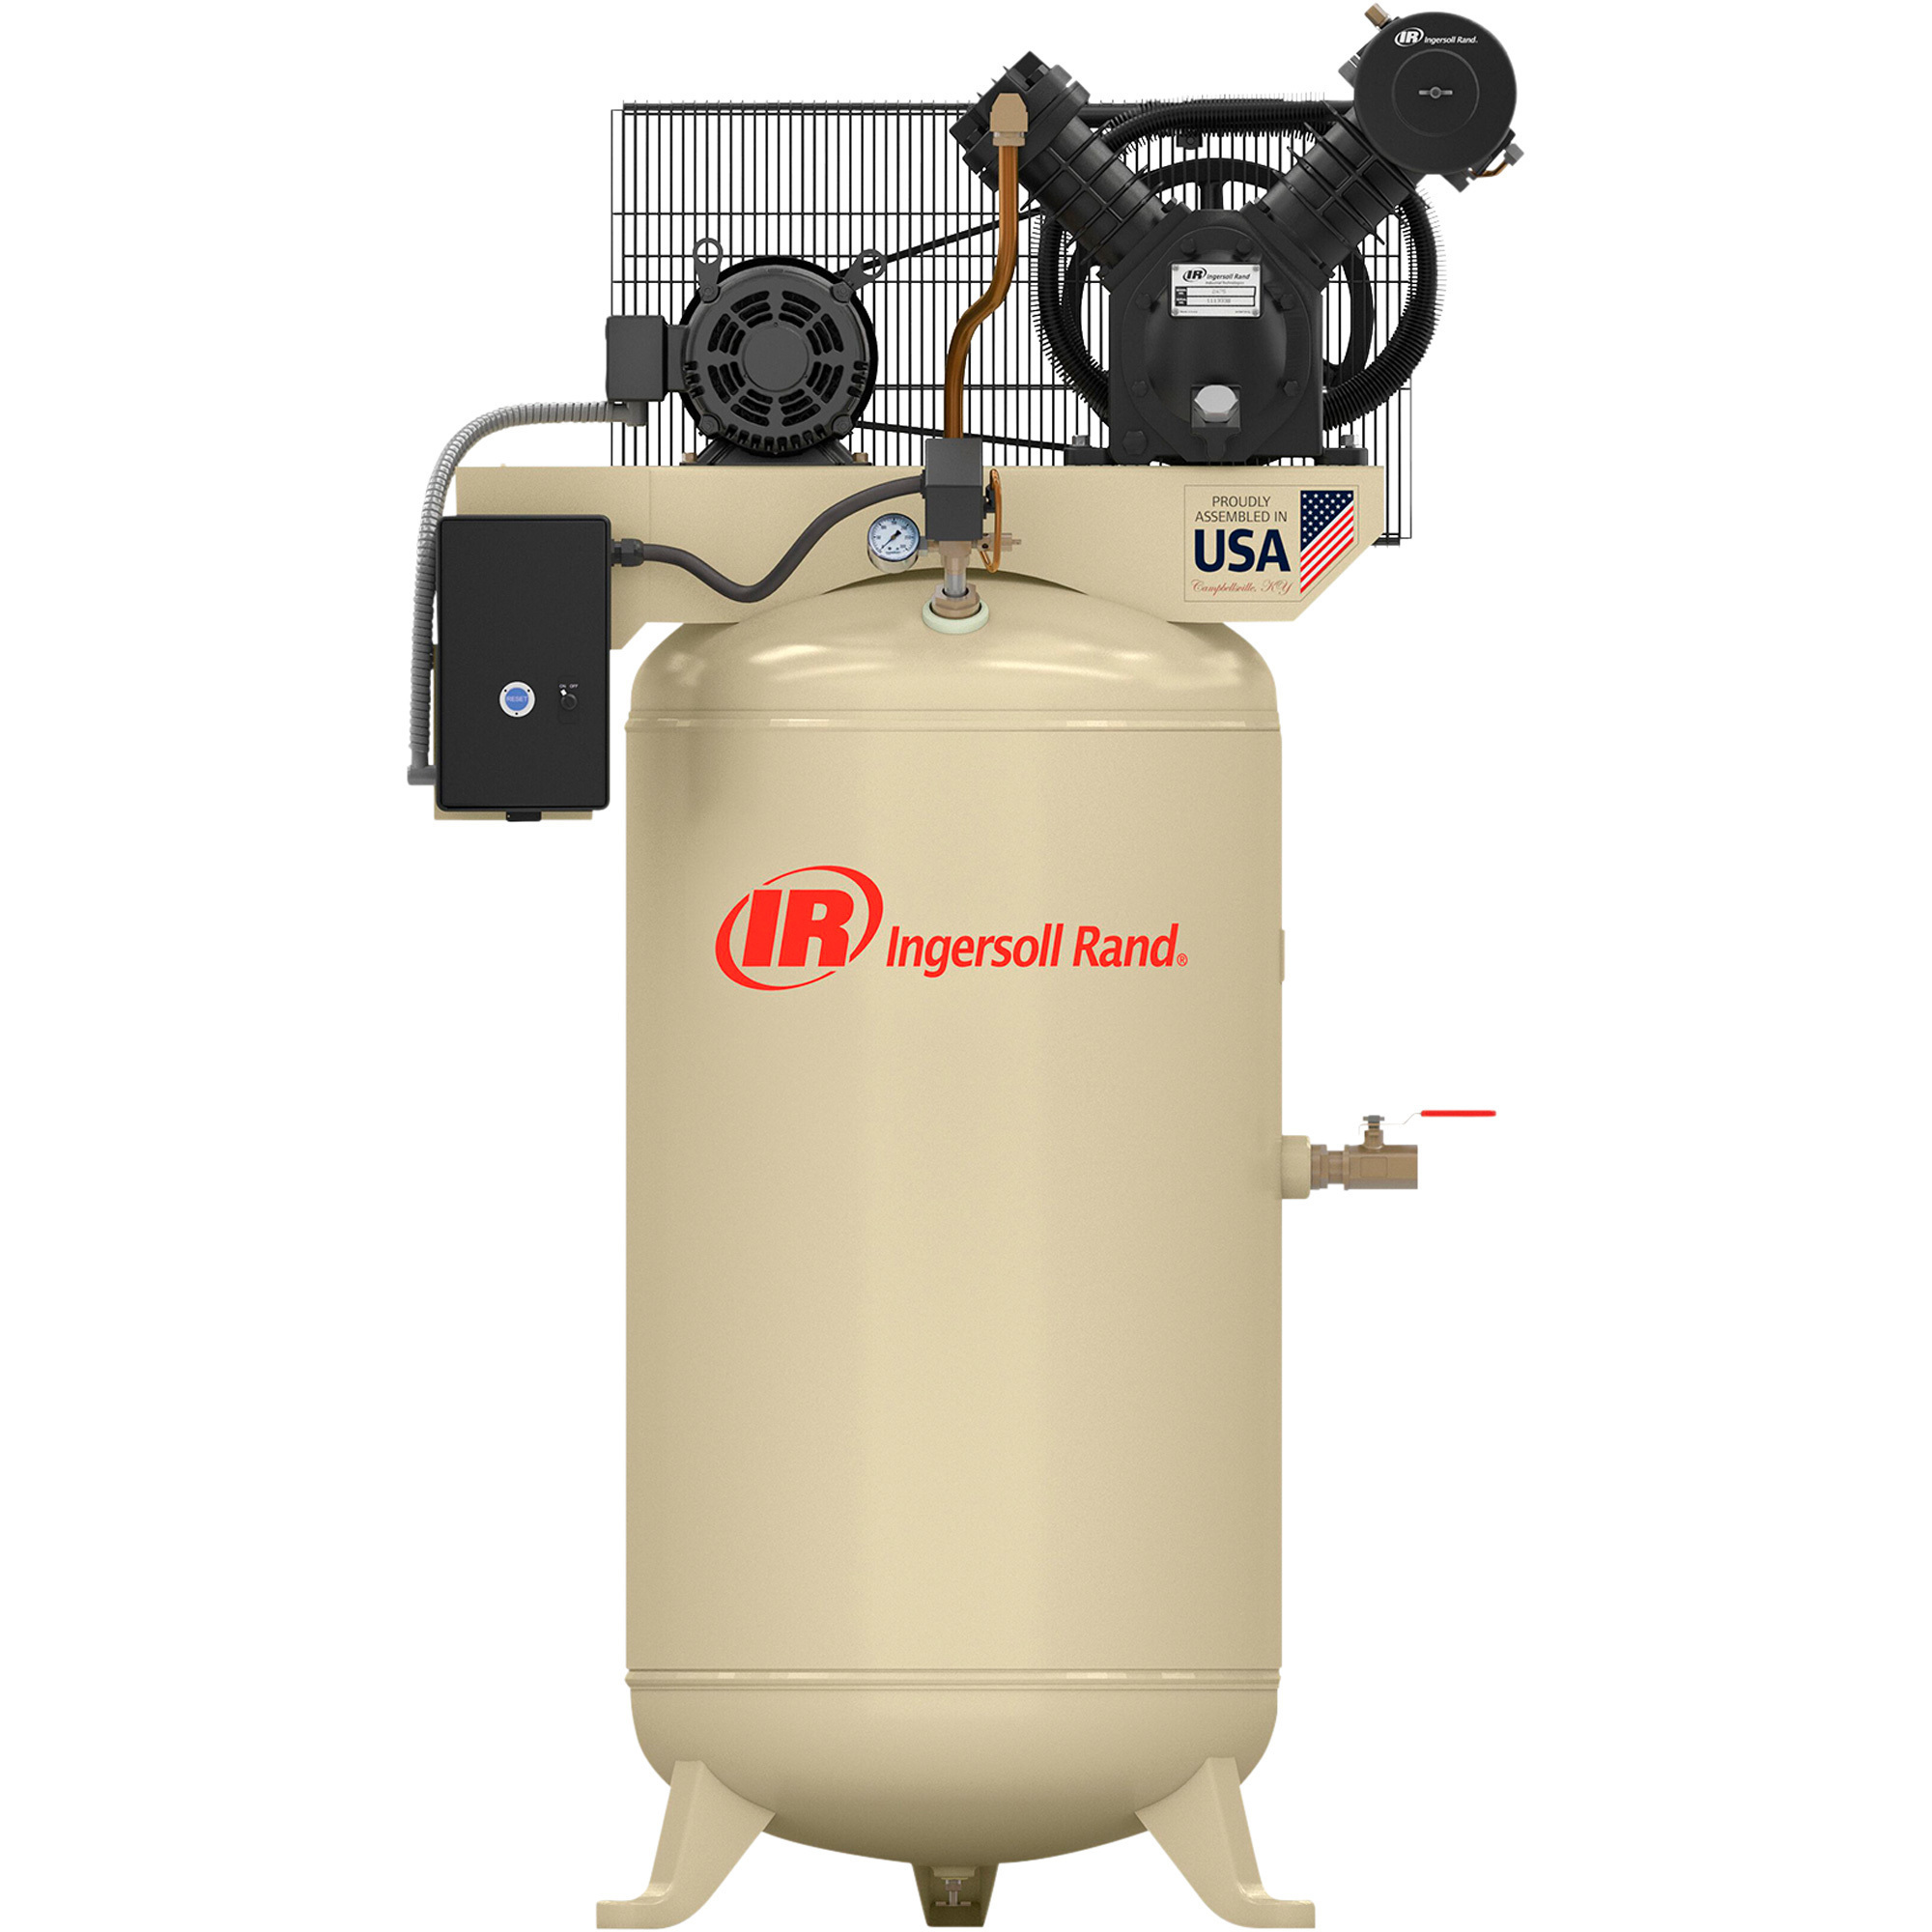 Ingersoll Rand Type-30 Reciprocating Air Compressor, 5 HP, 460 Volt 3 Phase, 80 Gallon, Model 2475N5-V